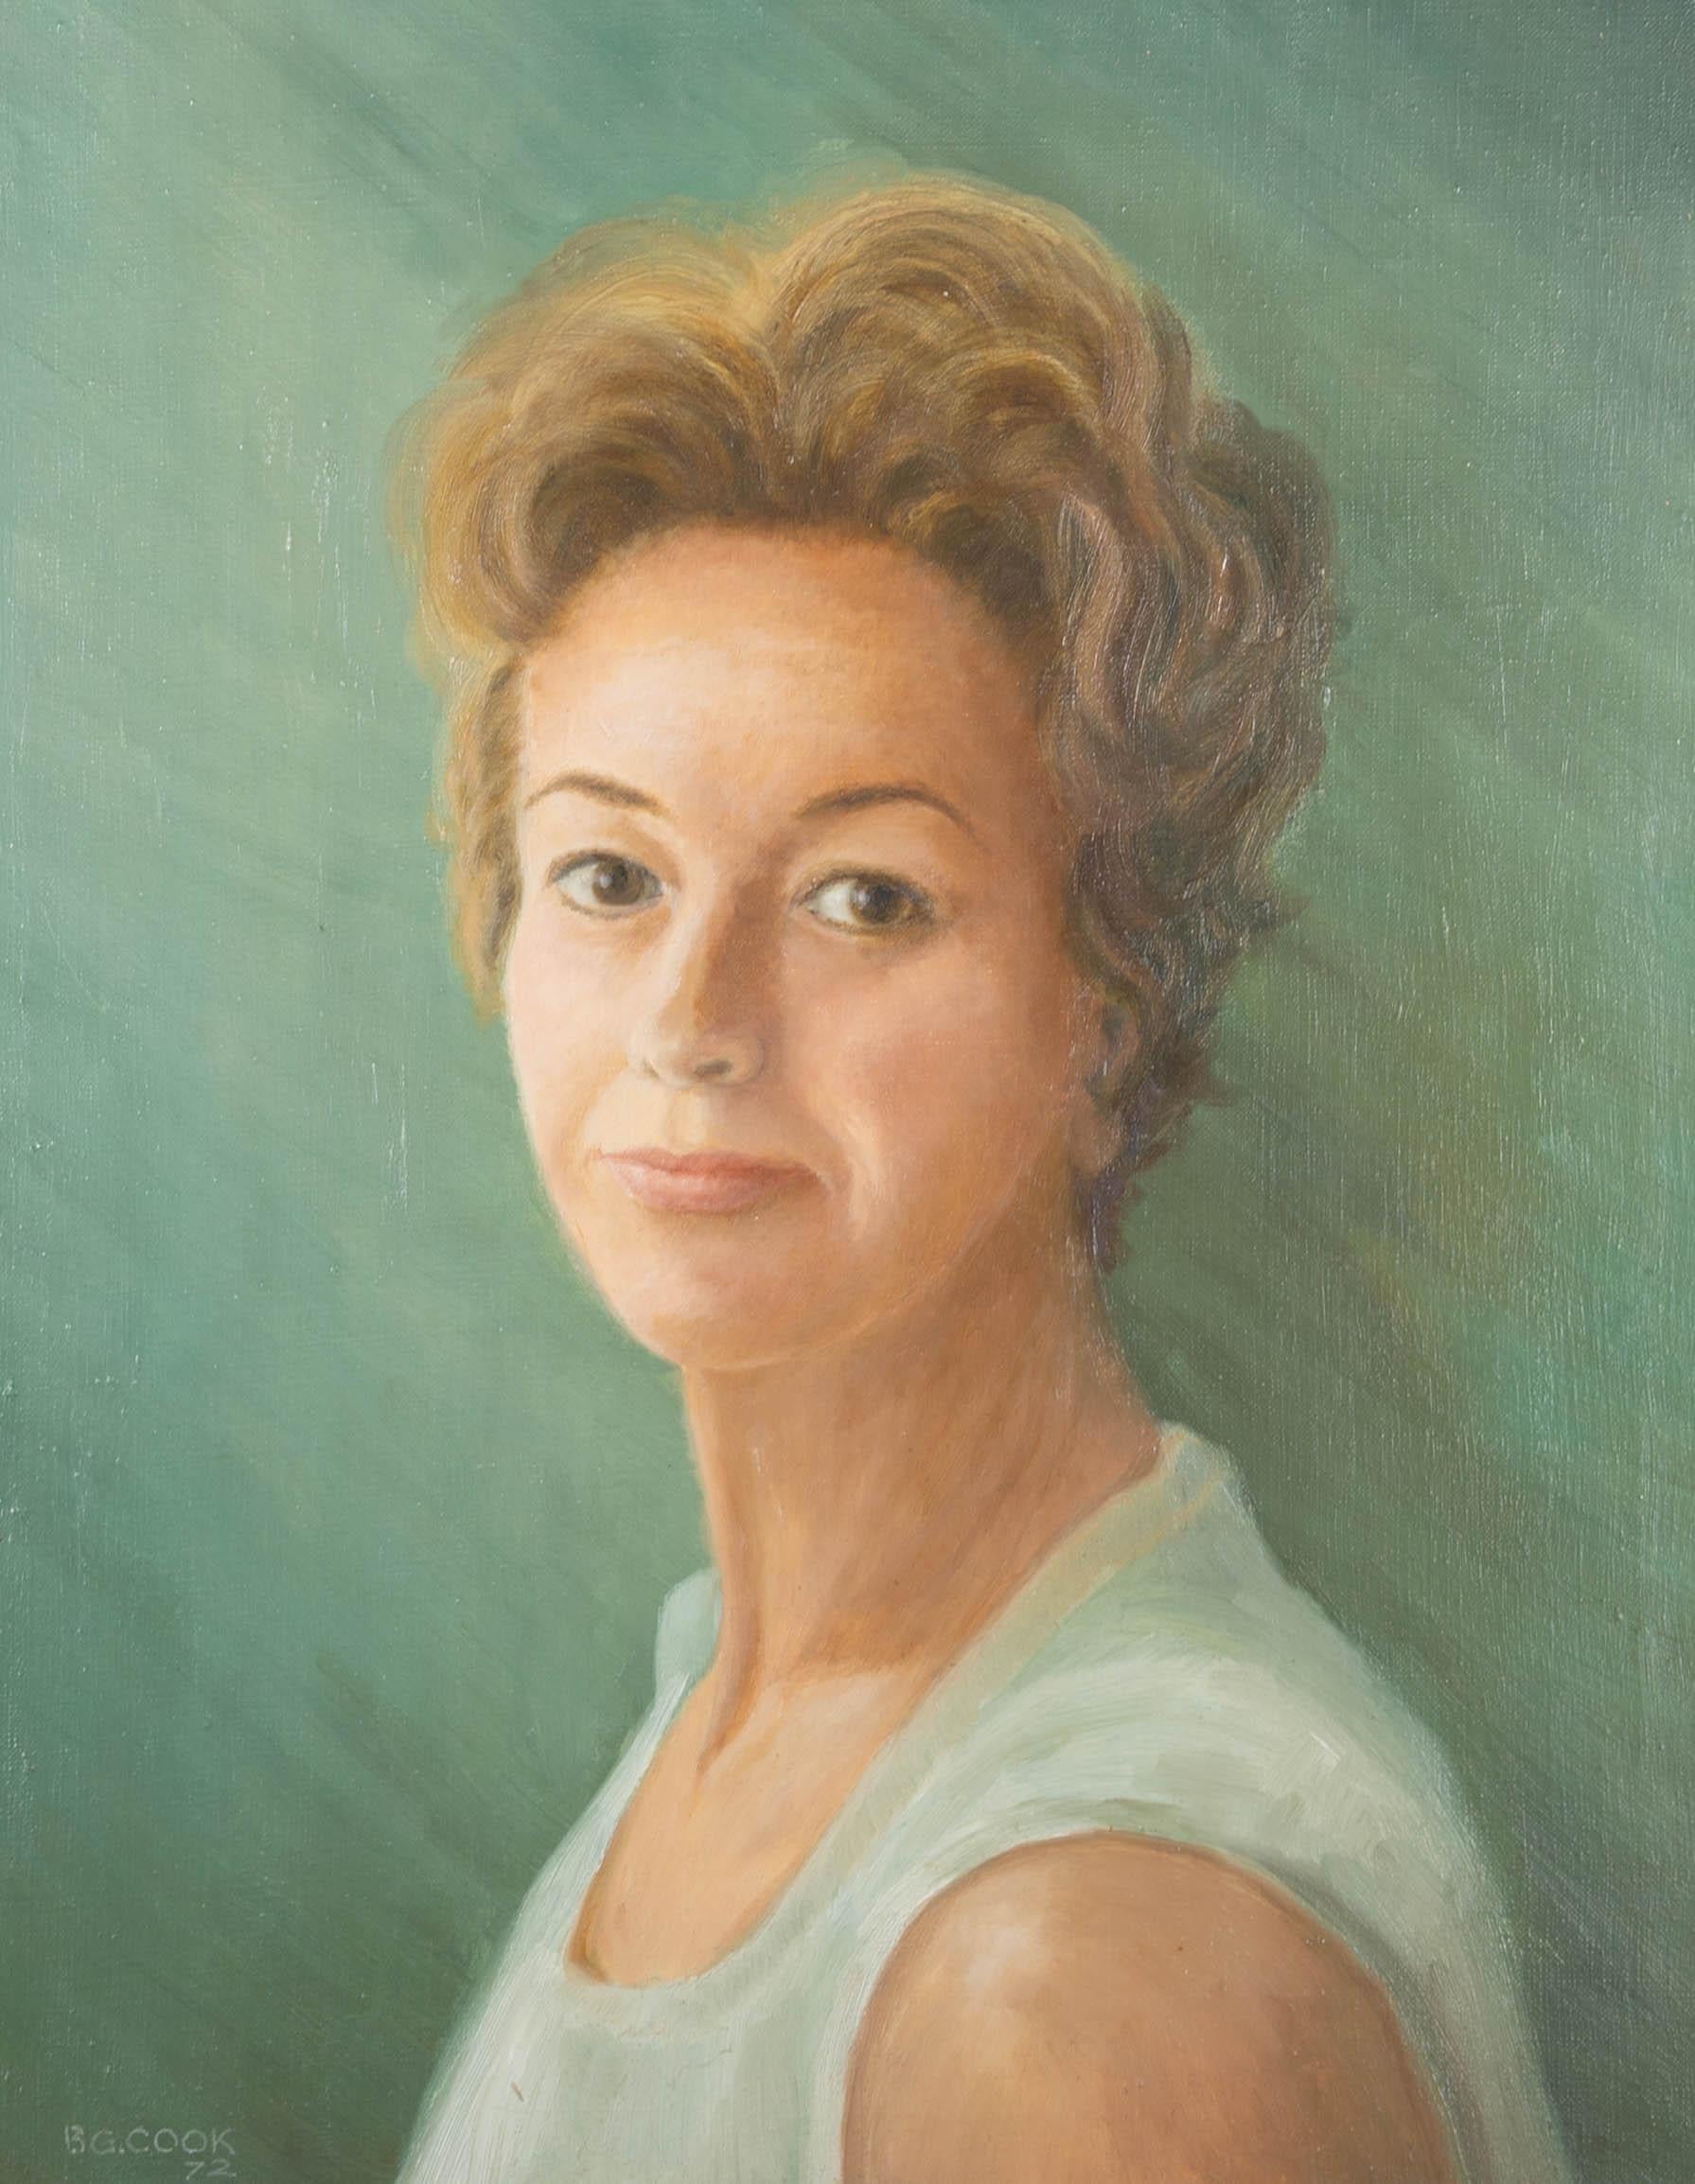 B.G. Cook - 1972 Oil, Female Portrait For Sale 2